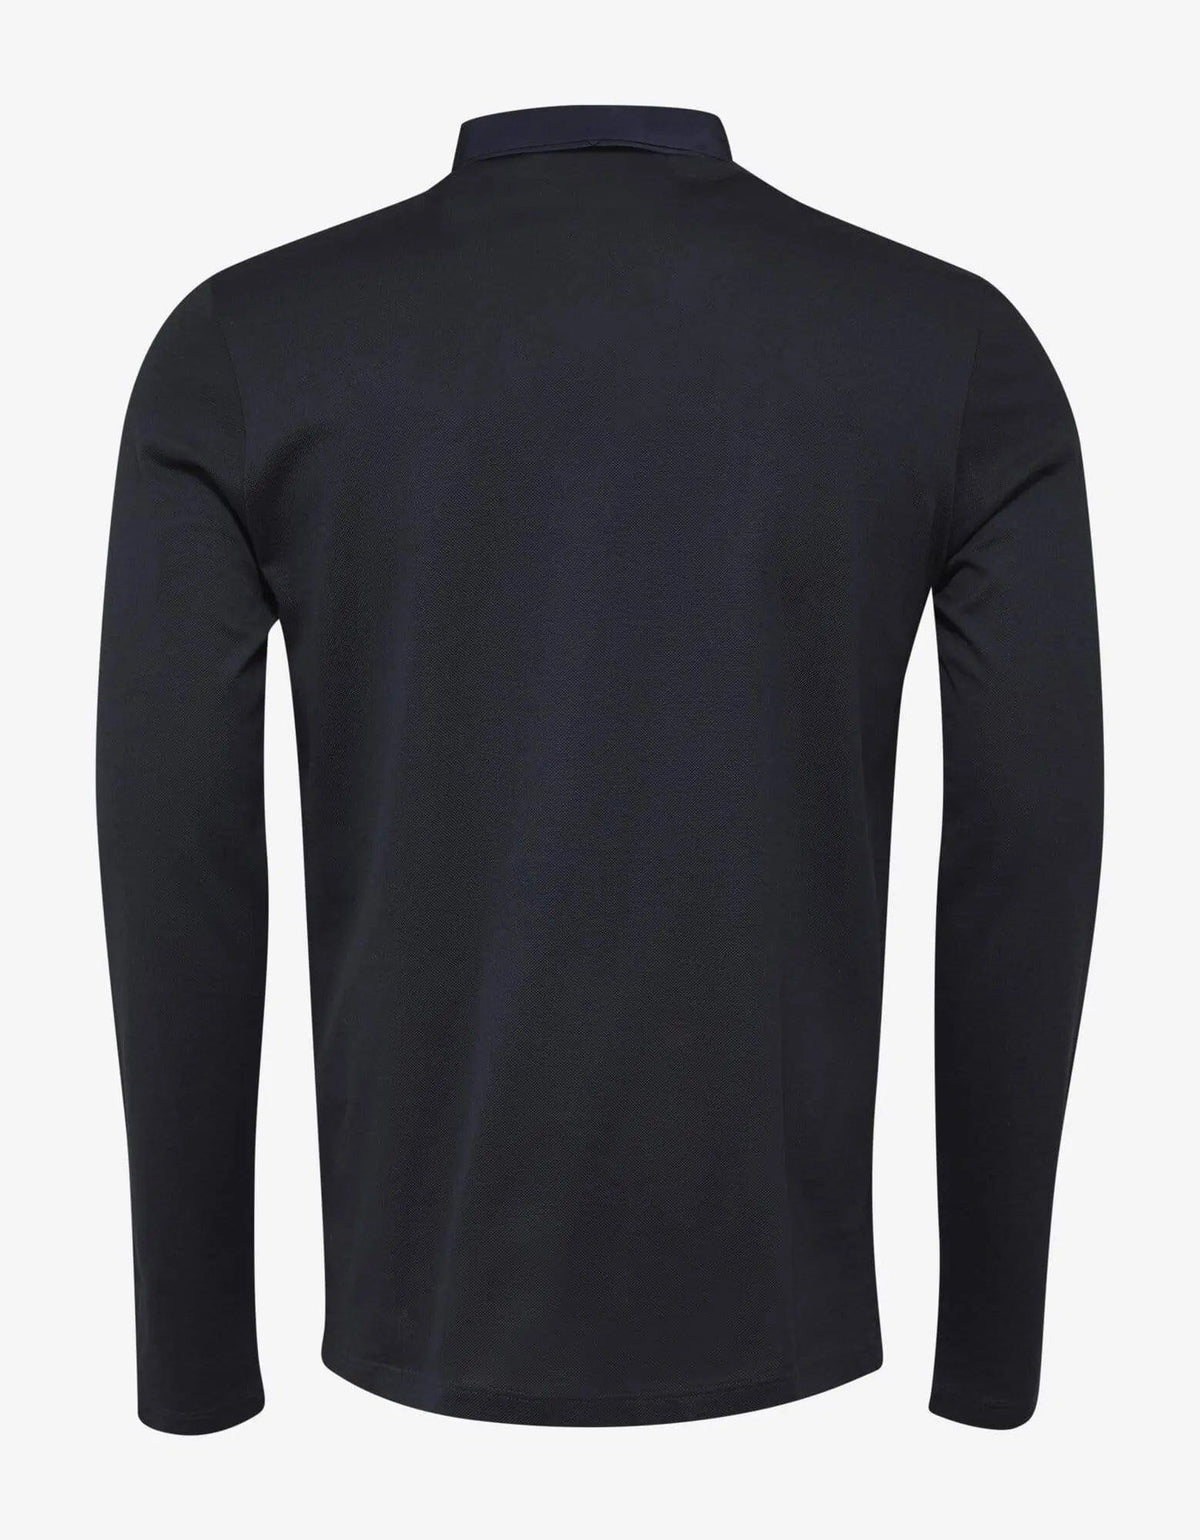 Lanvin Lanvin Navy Blue Grosgrain Collar Long Sleeve Polo T-Shirt